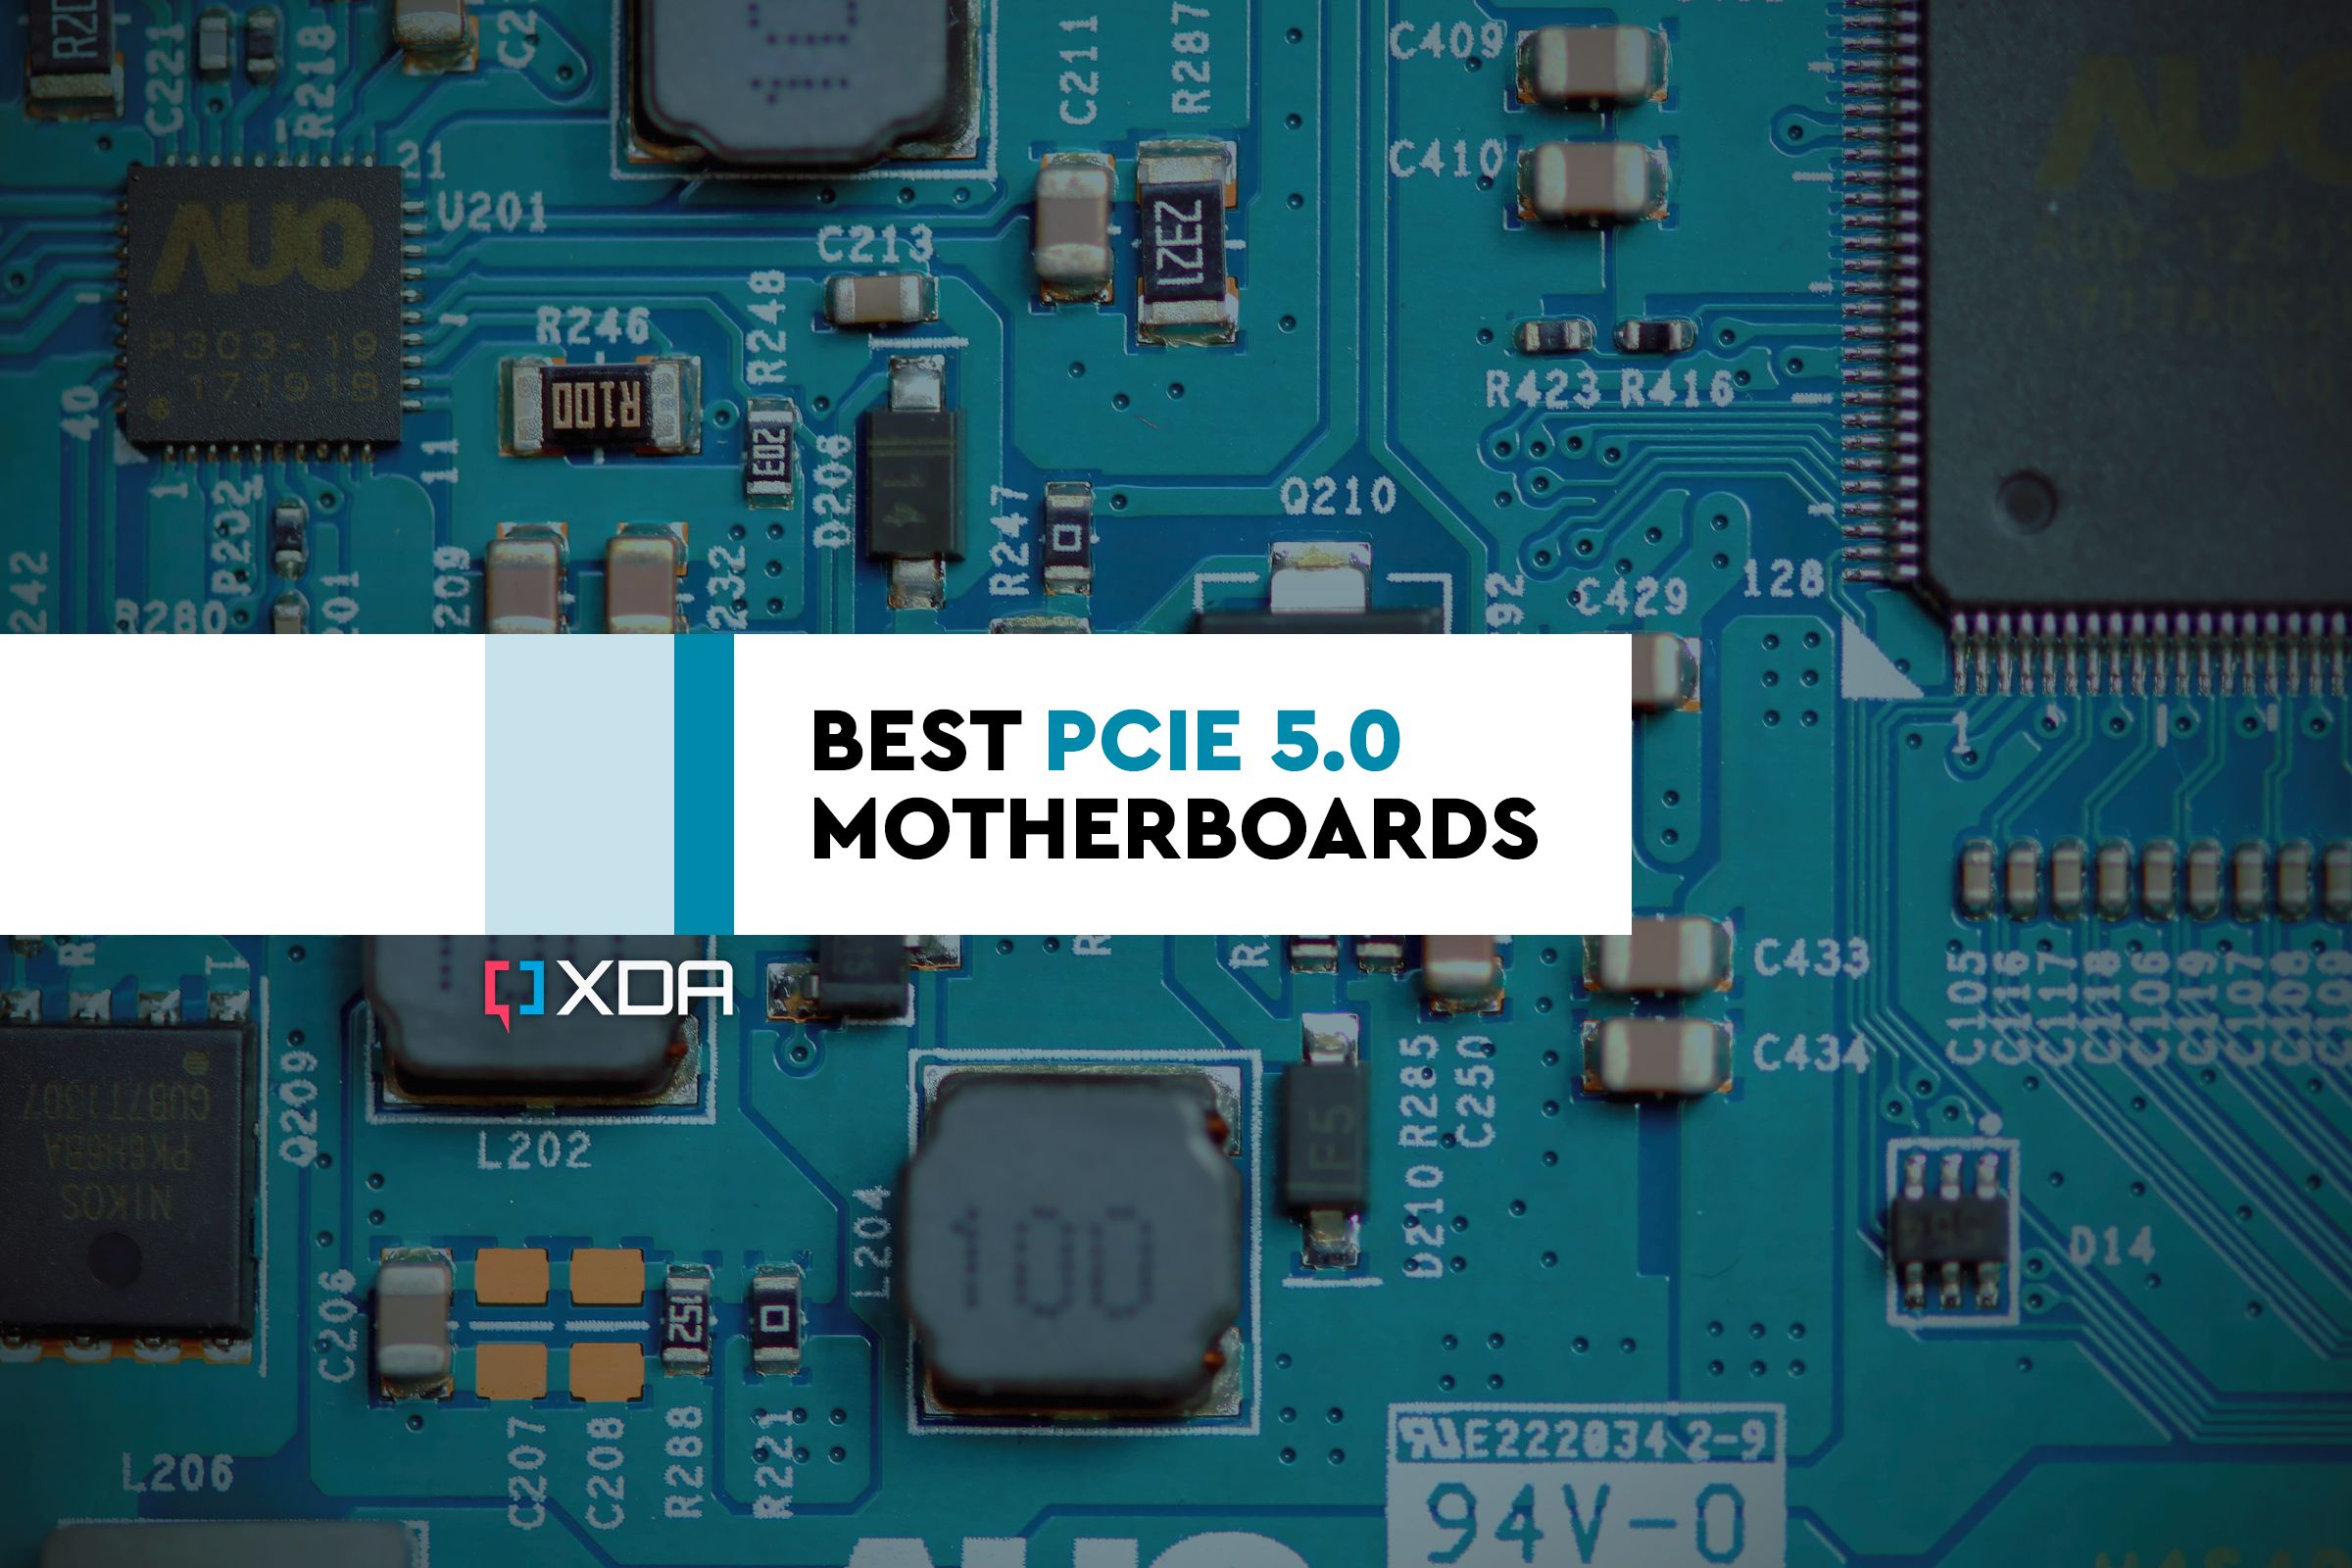 Best PCIe 5.0 motherboards